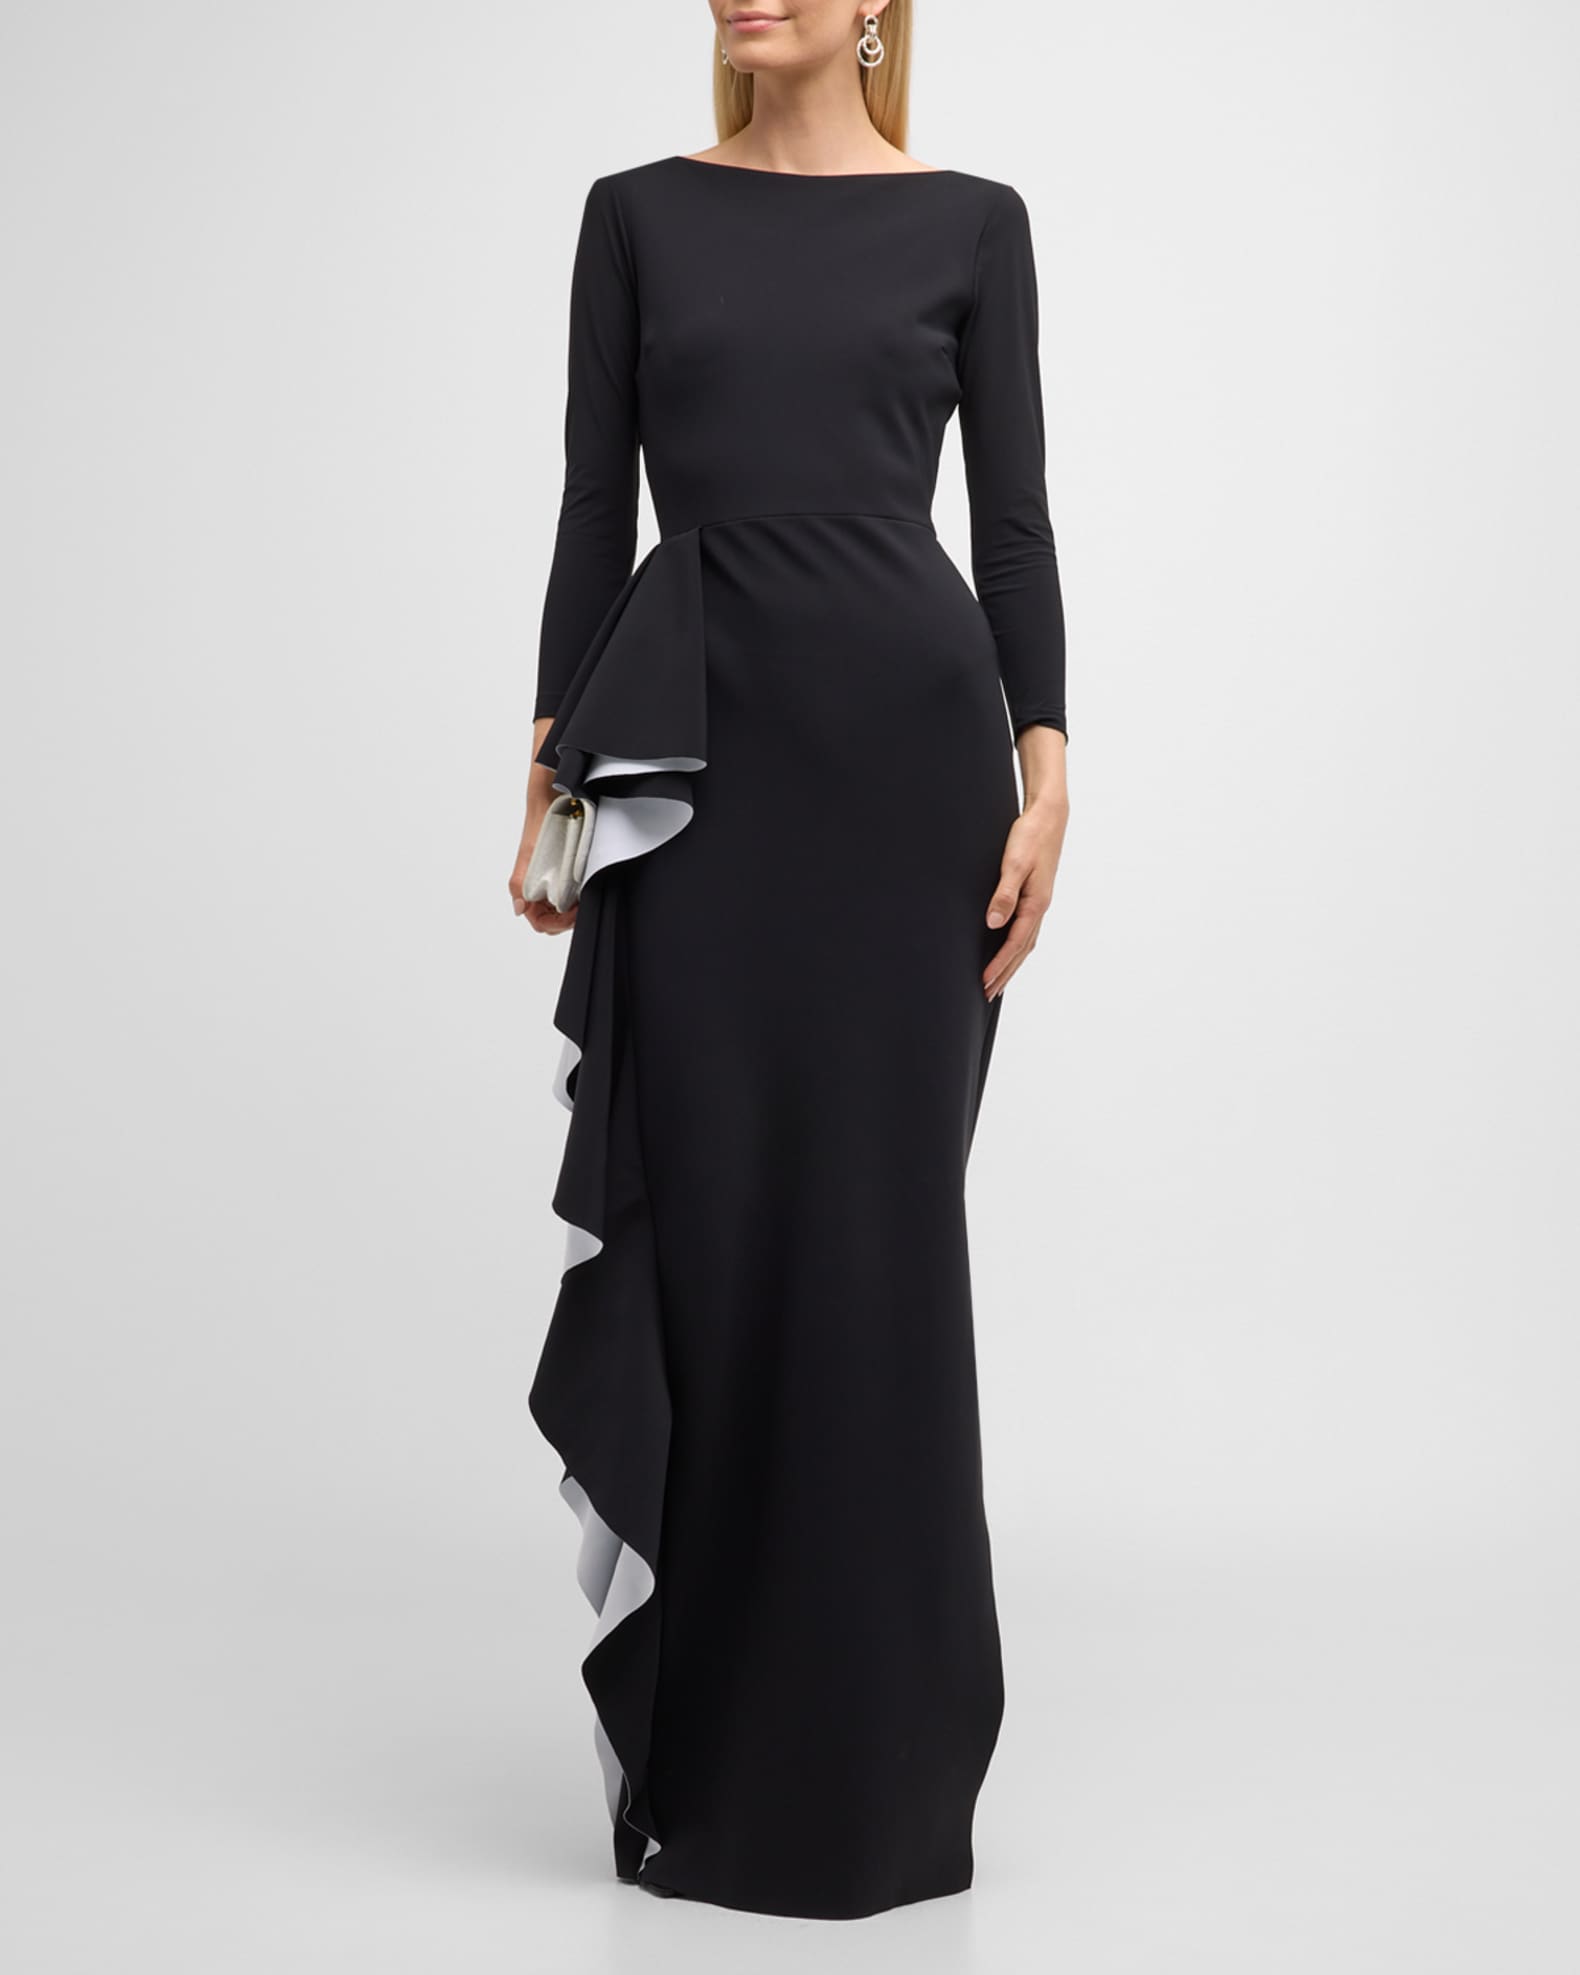 Chiara Boni La Petite Robe 3/4-Sleeve Colorblock Ruffle Column Gown ...